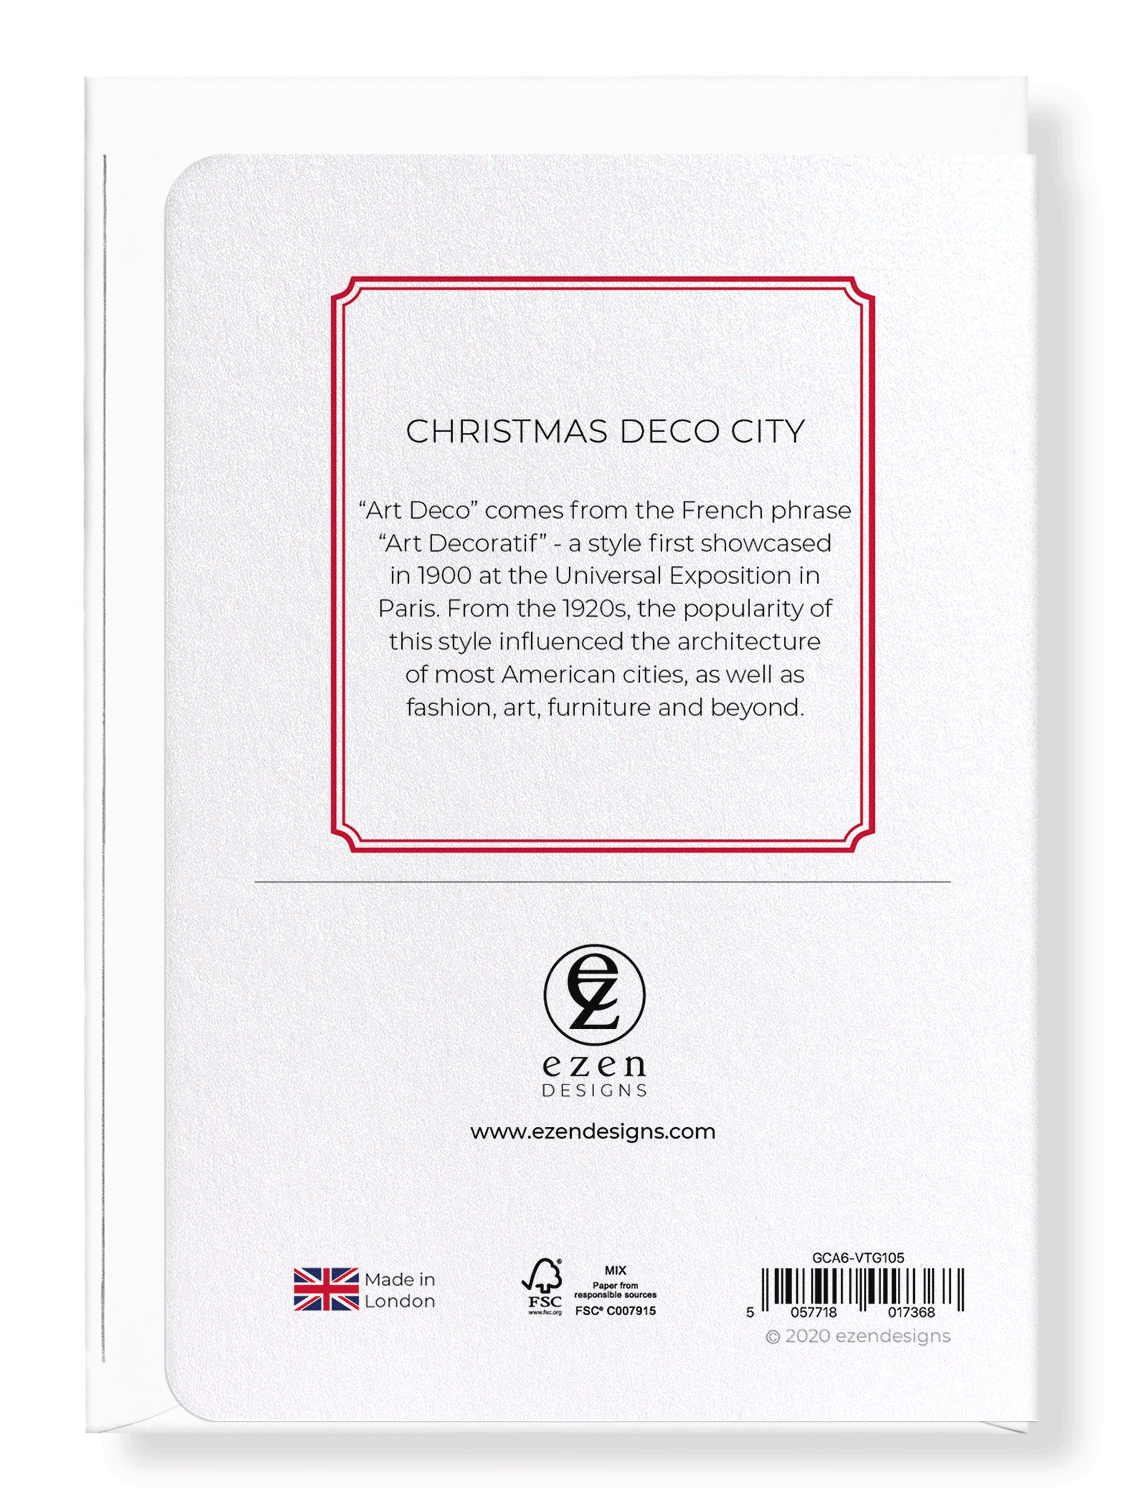 Ezen Designs - Christmas deco city - Greeting Card - Back